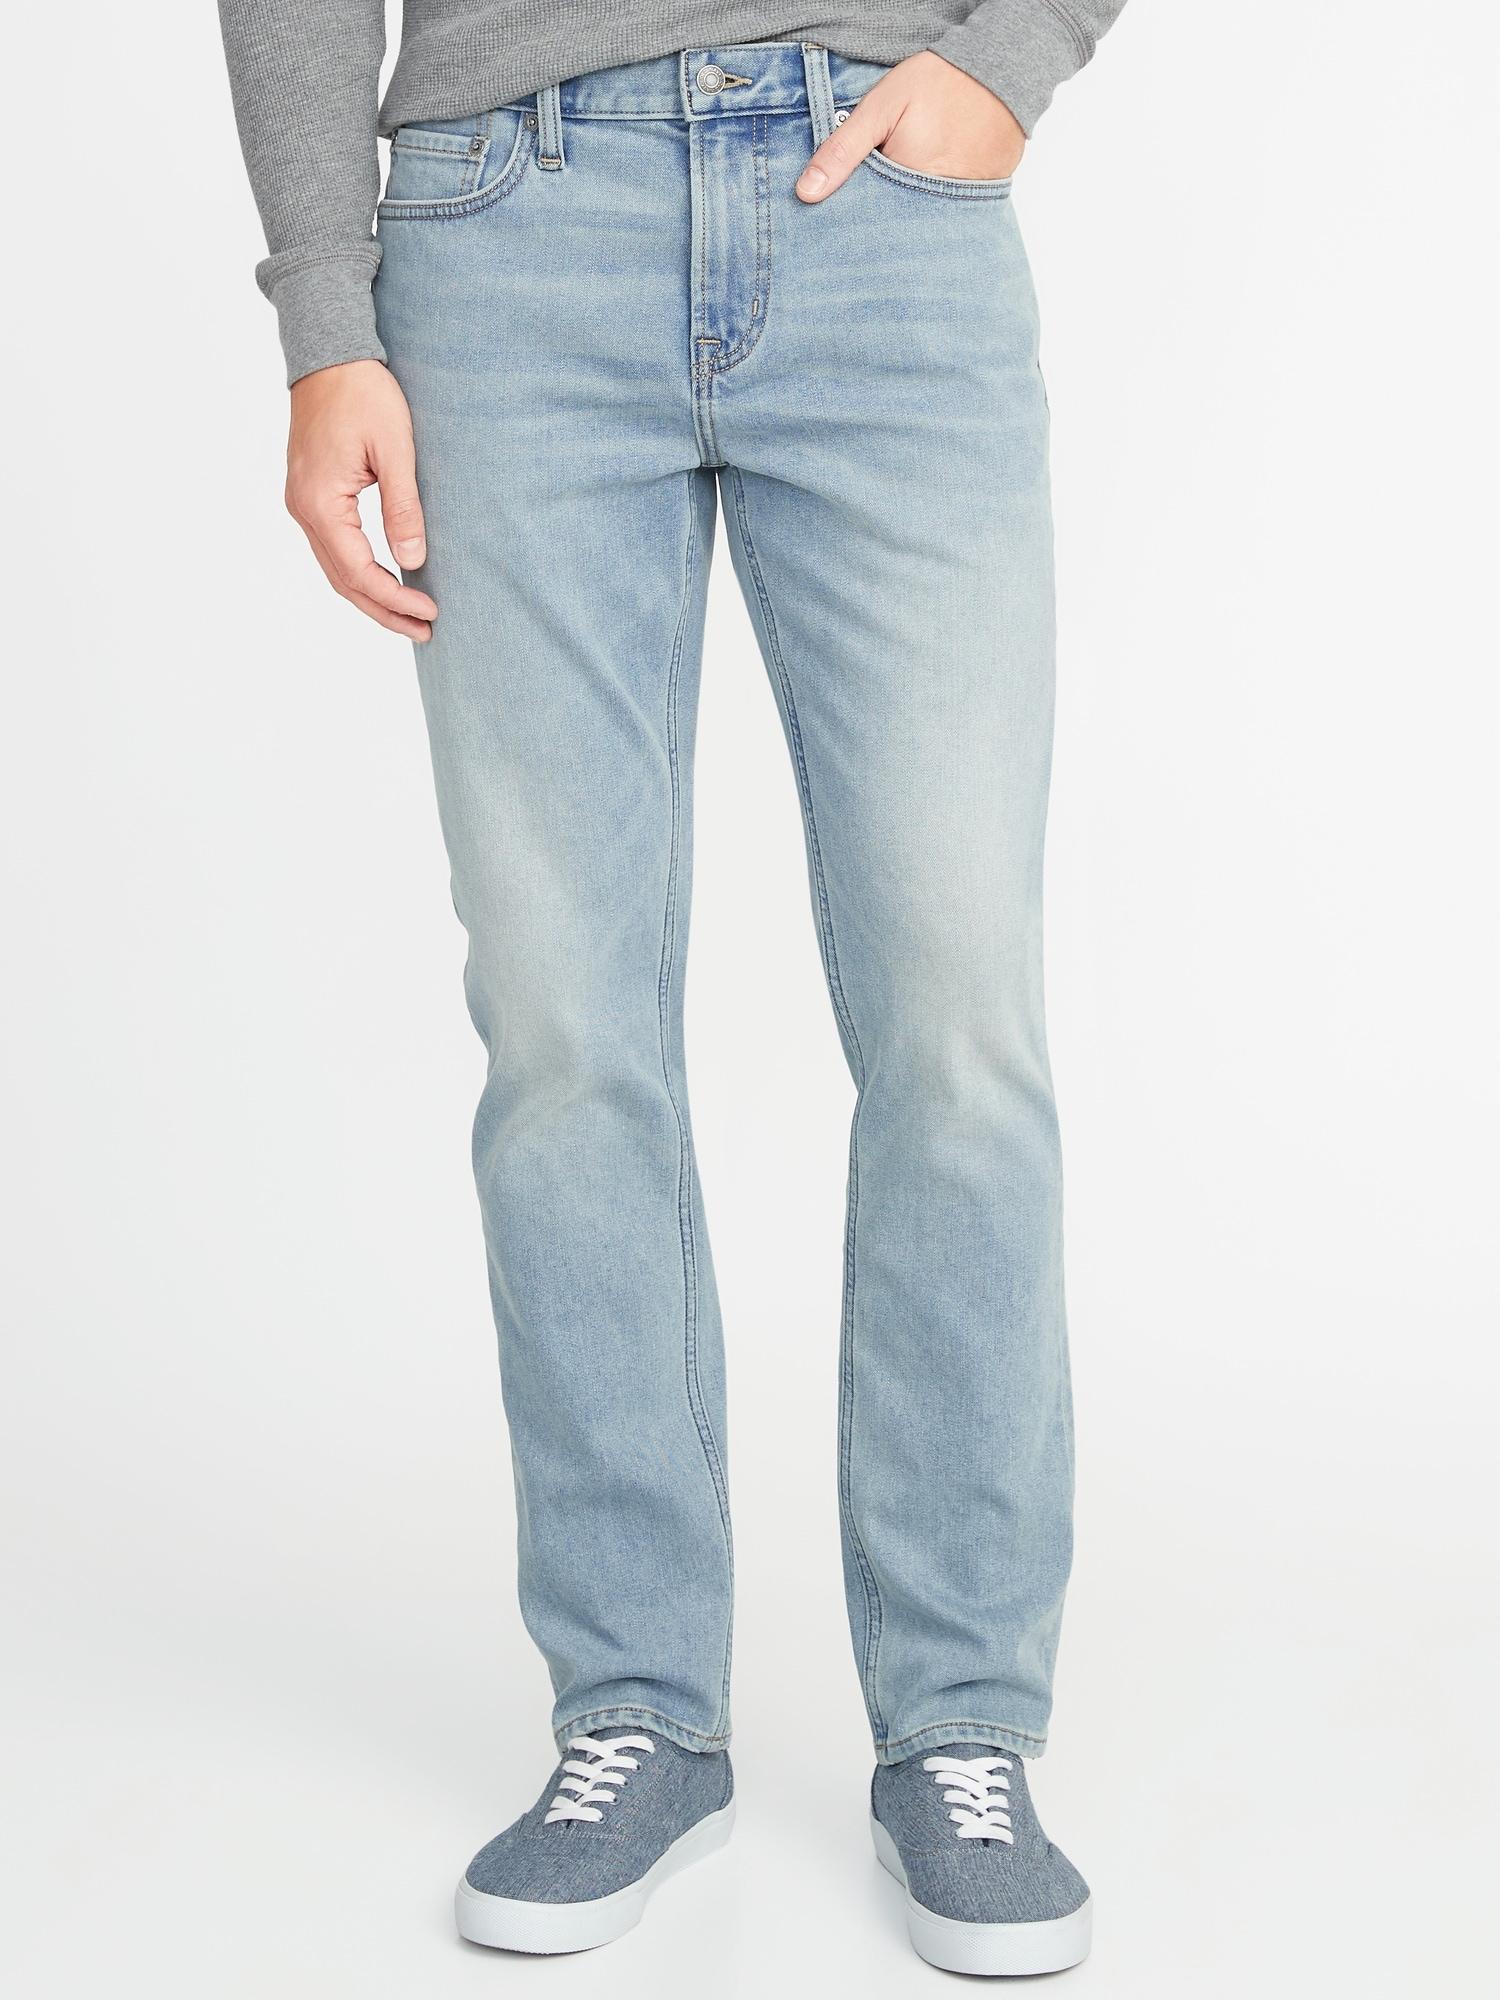 old navy slim jeans